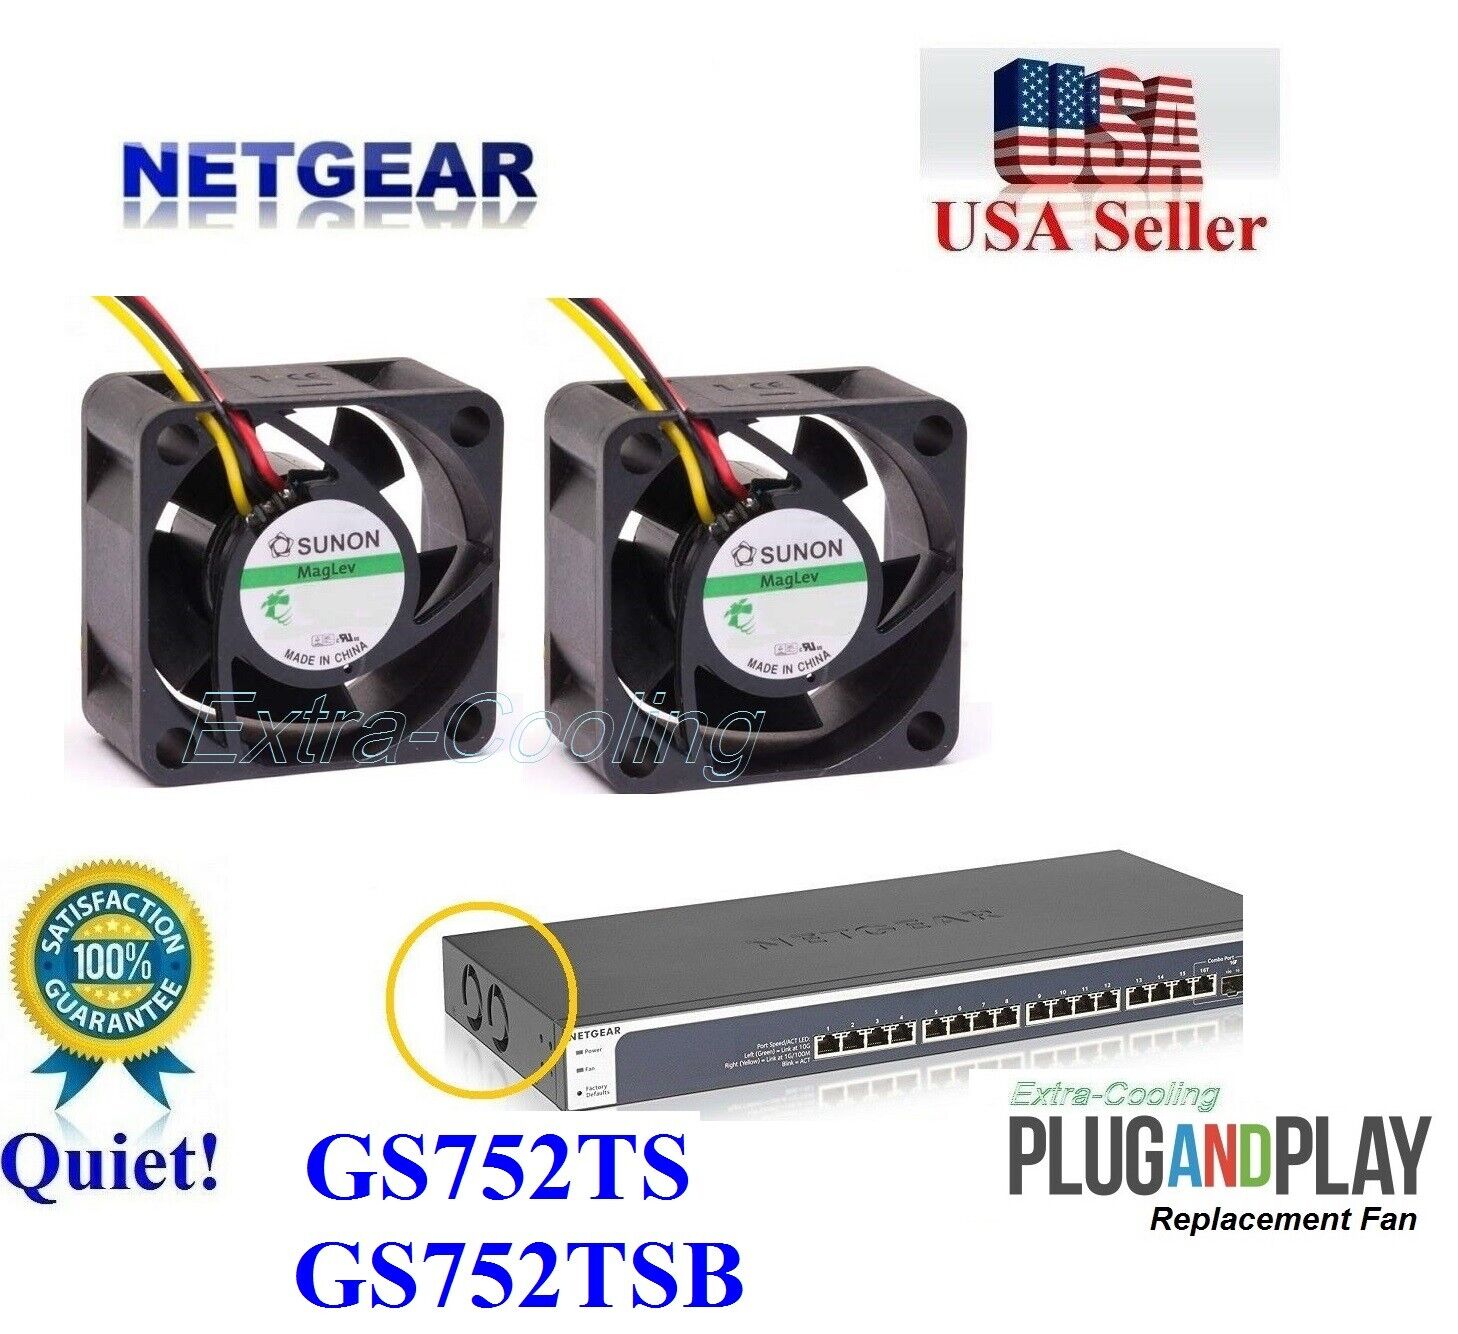 Set of 2x Quiet Replacement Fans for NETGEAR ProSAFE GS752TS GS752TSB